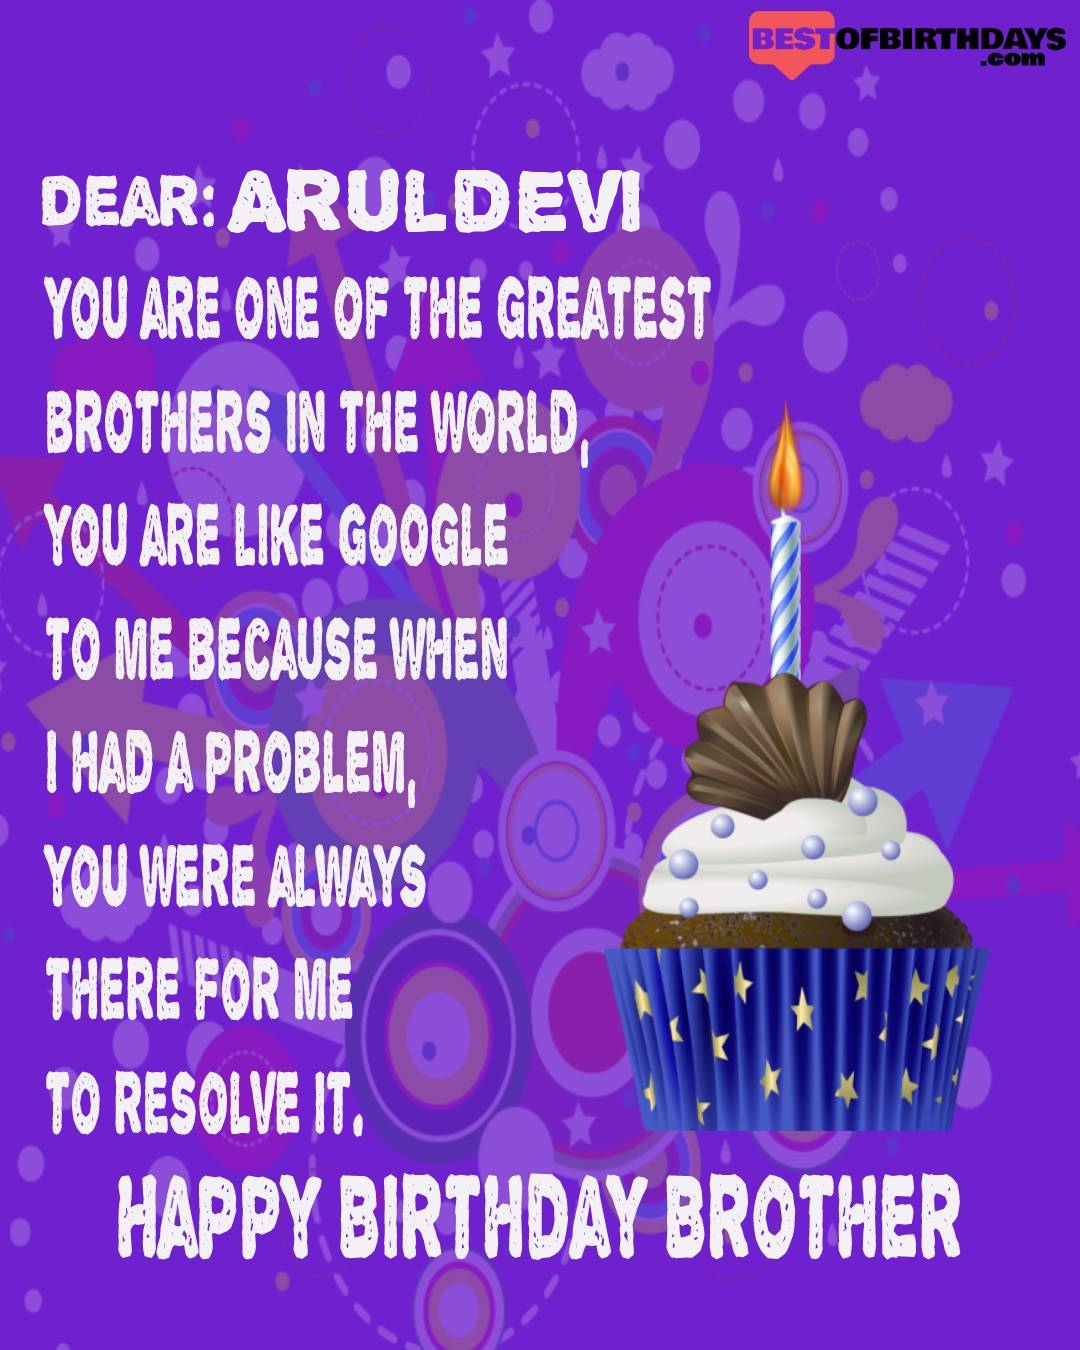 Happy birthday aruldevi bhai brother bro